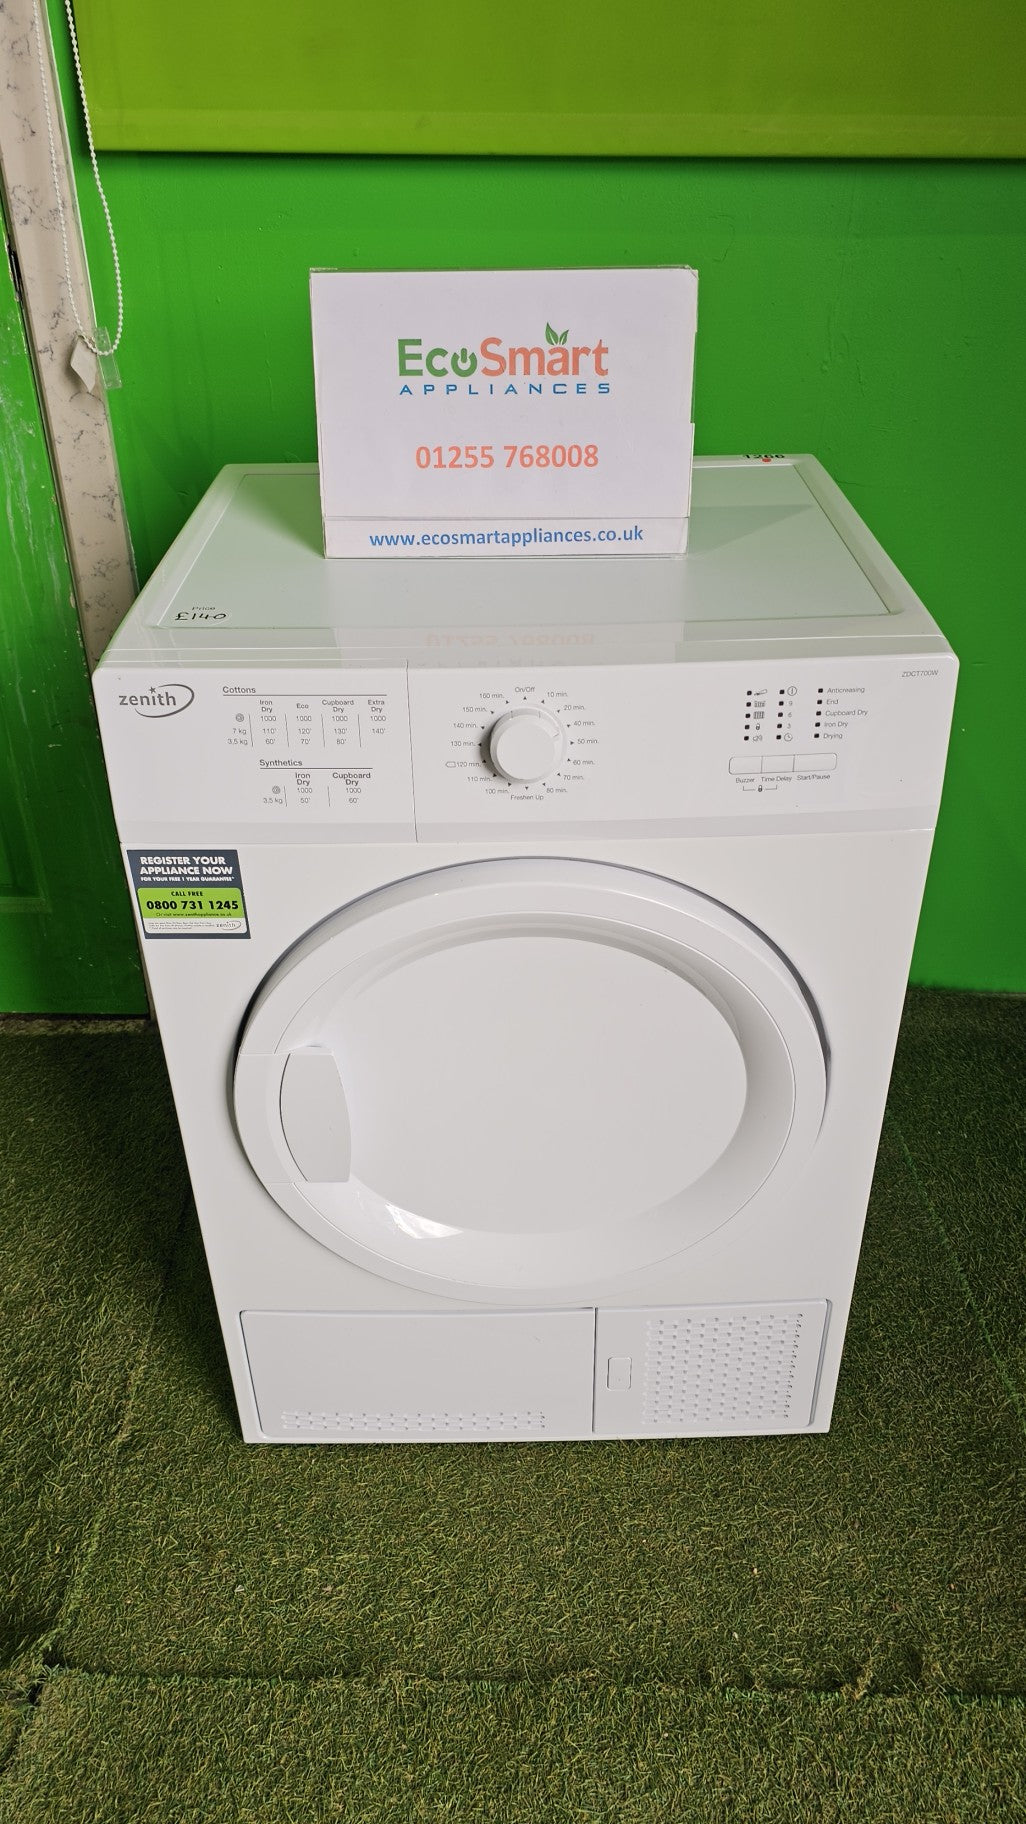 EcoSmart Appliances - Zenith 7kg Condenser Tumble Dryer (1266)